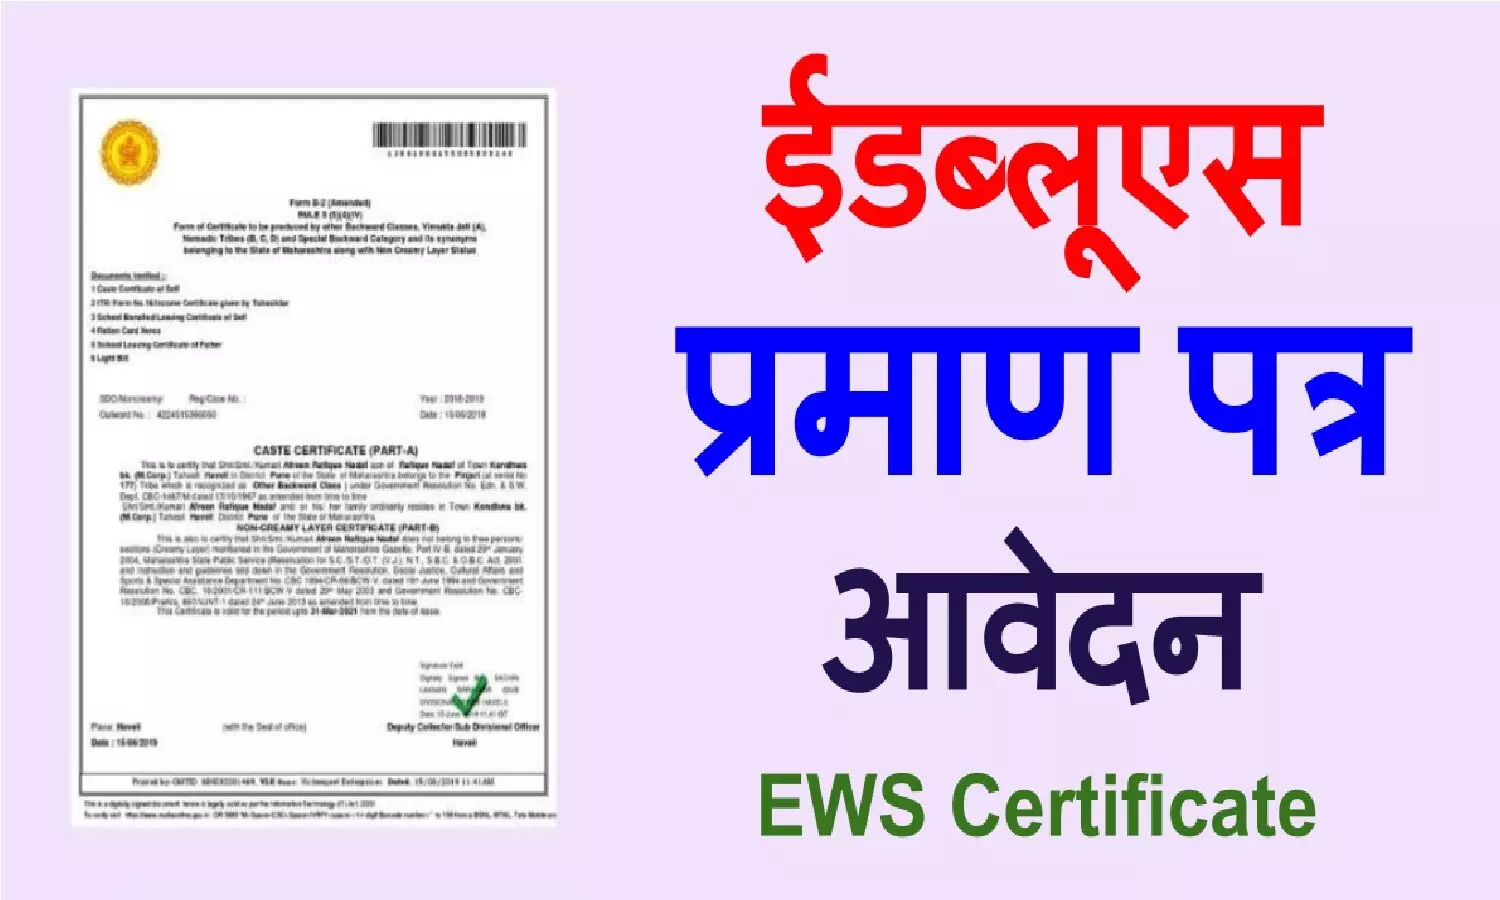 ews certificate banane ke liye documents